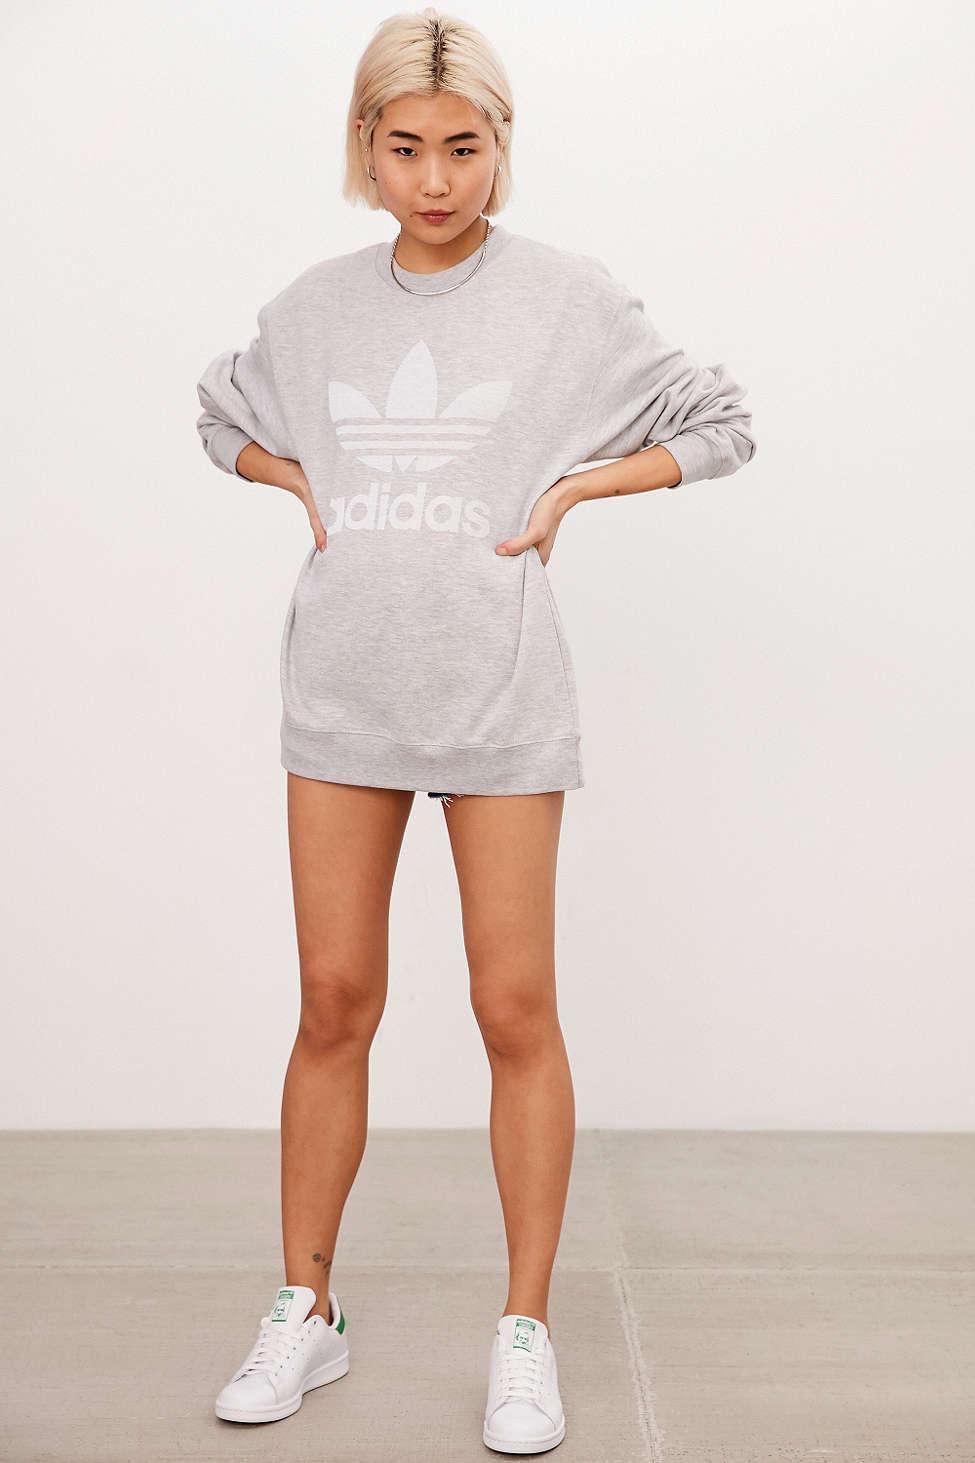 Lyst - Adidas Originals Originals Double Logo Crew Neck Sweatshirt in Gray